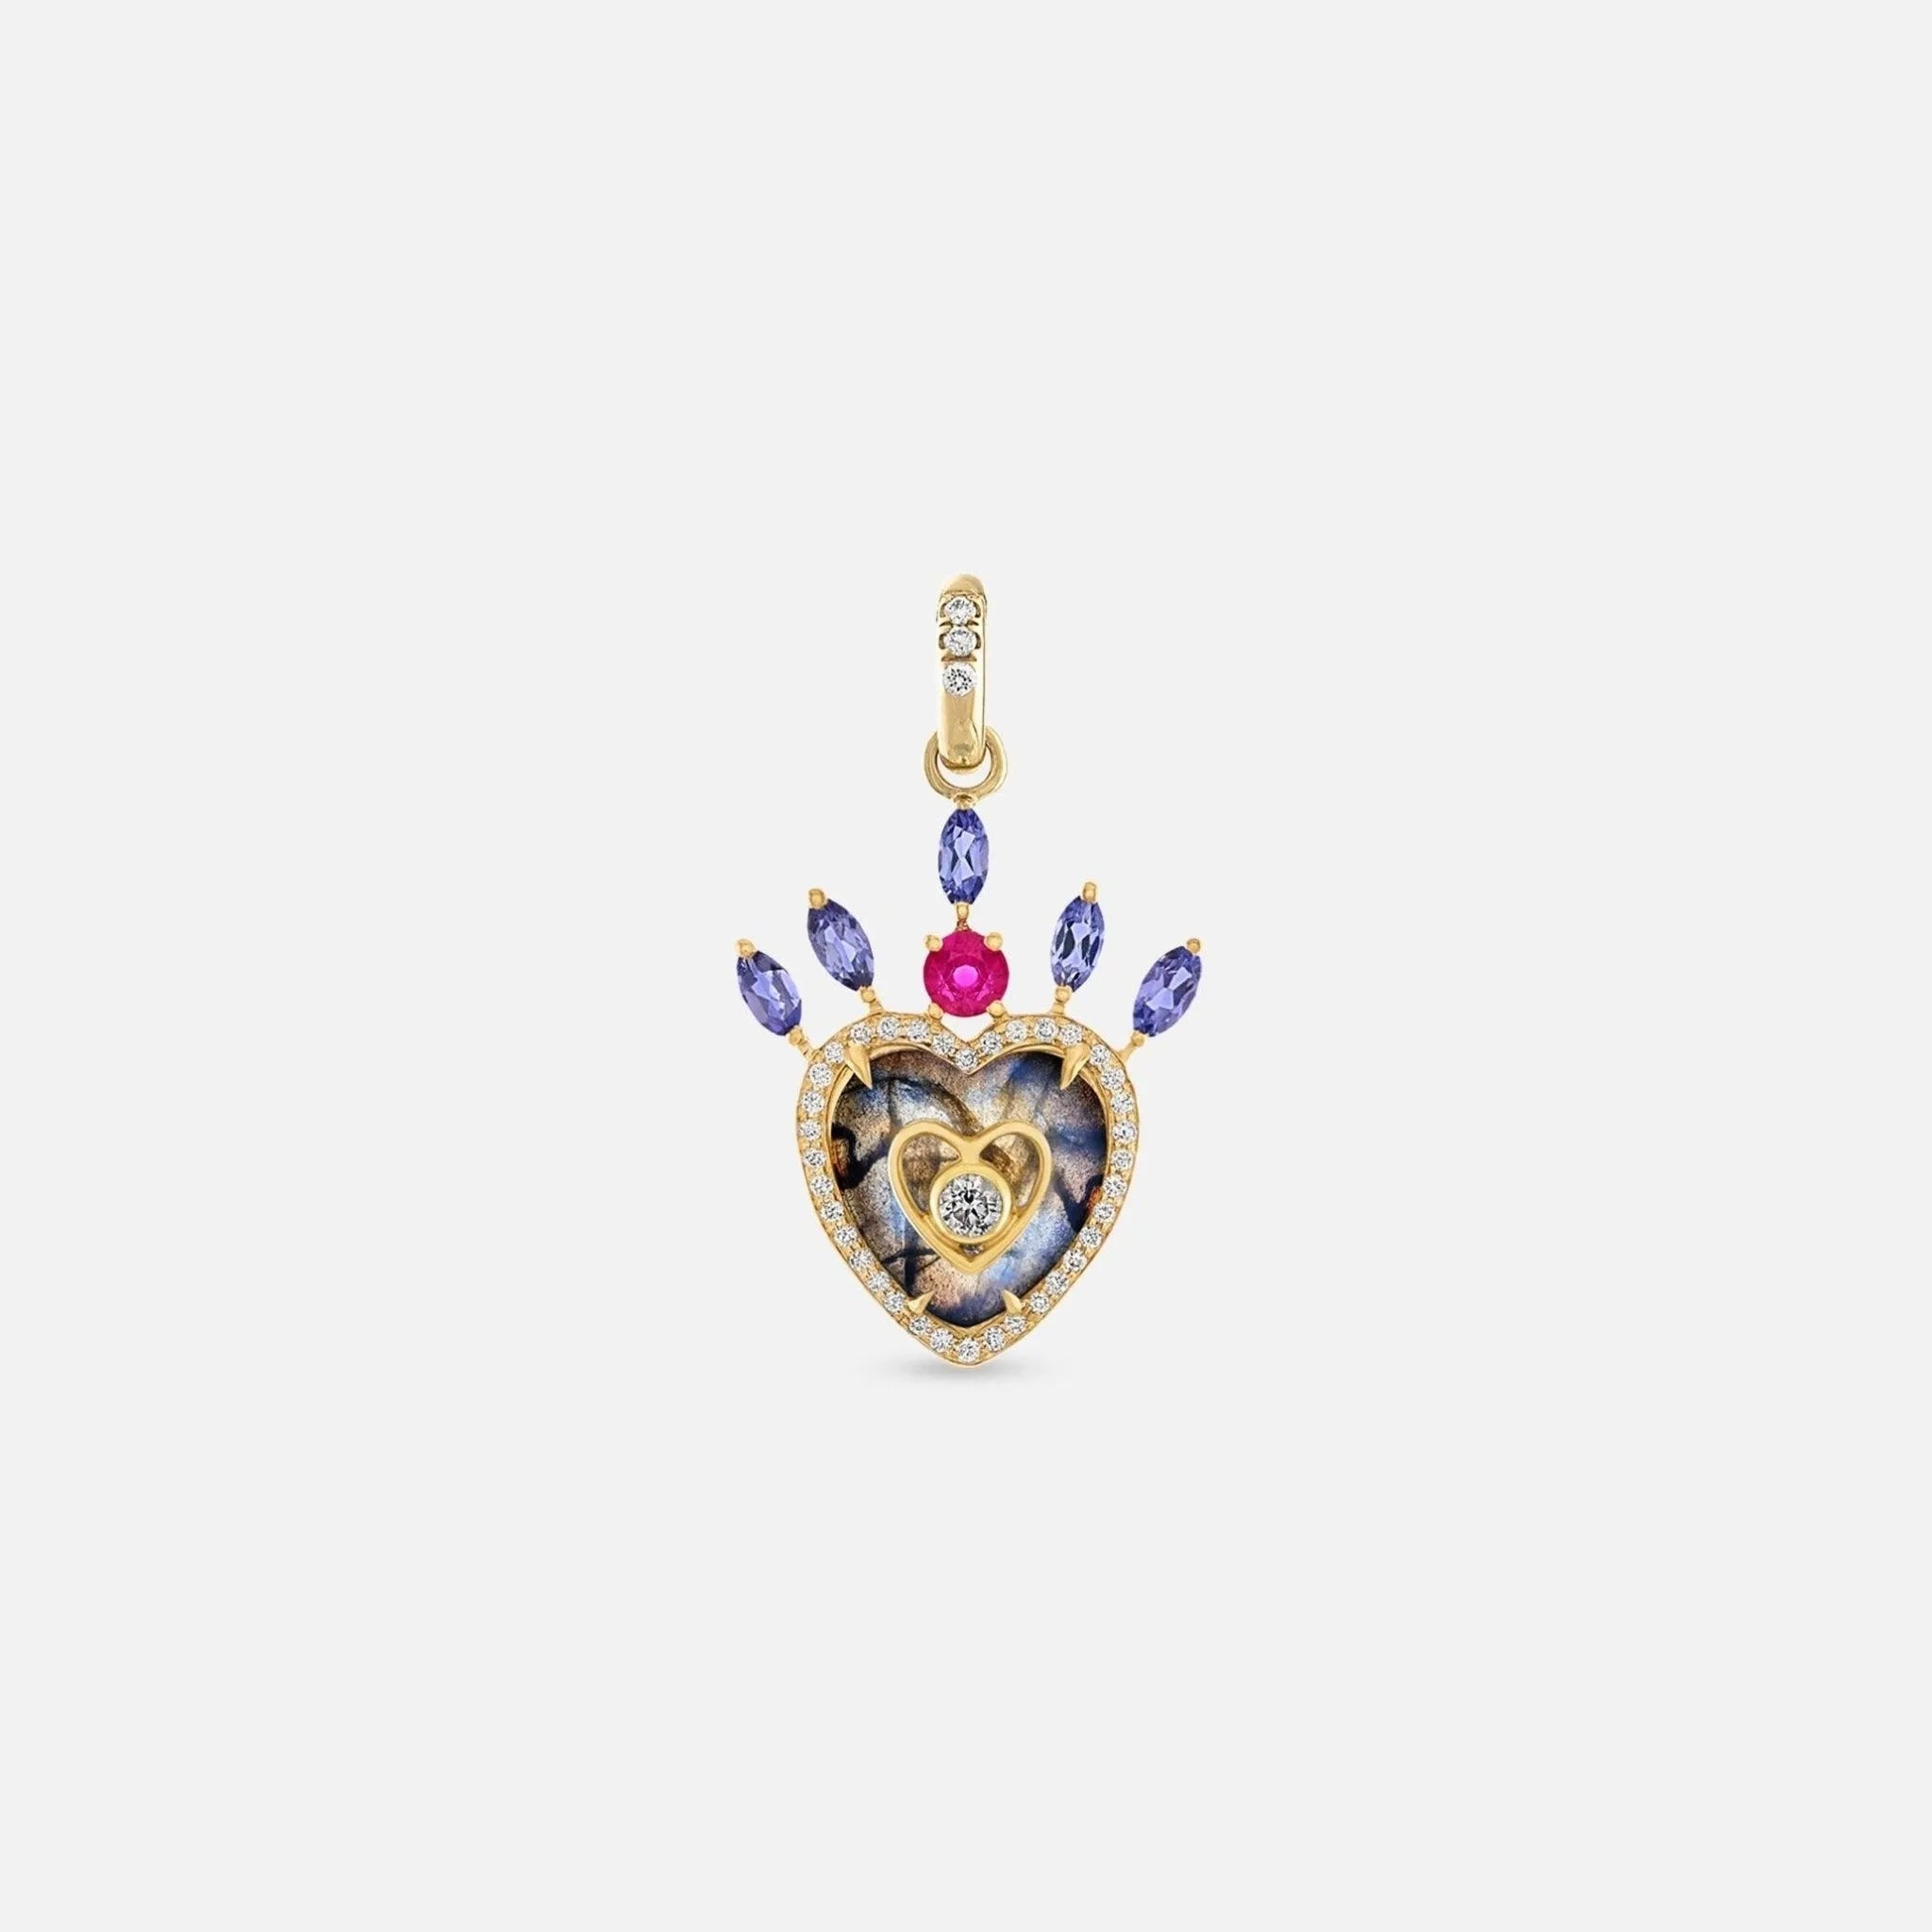 Queen of Hearts Pendant - At Present